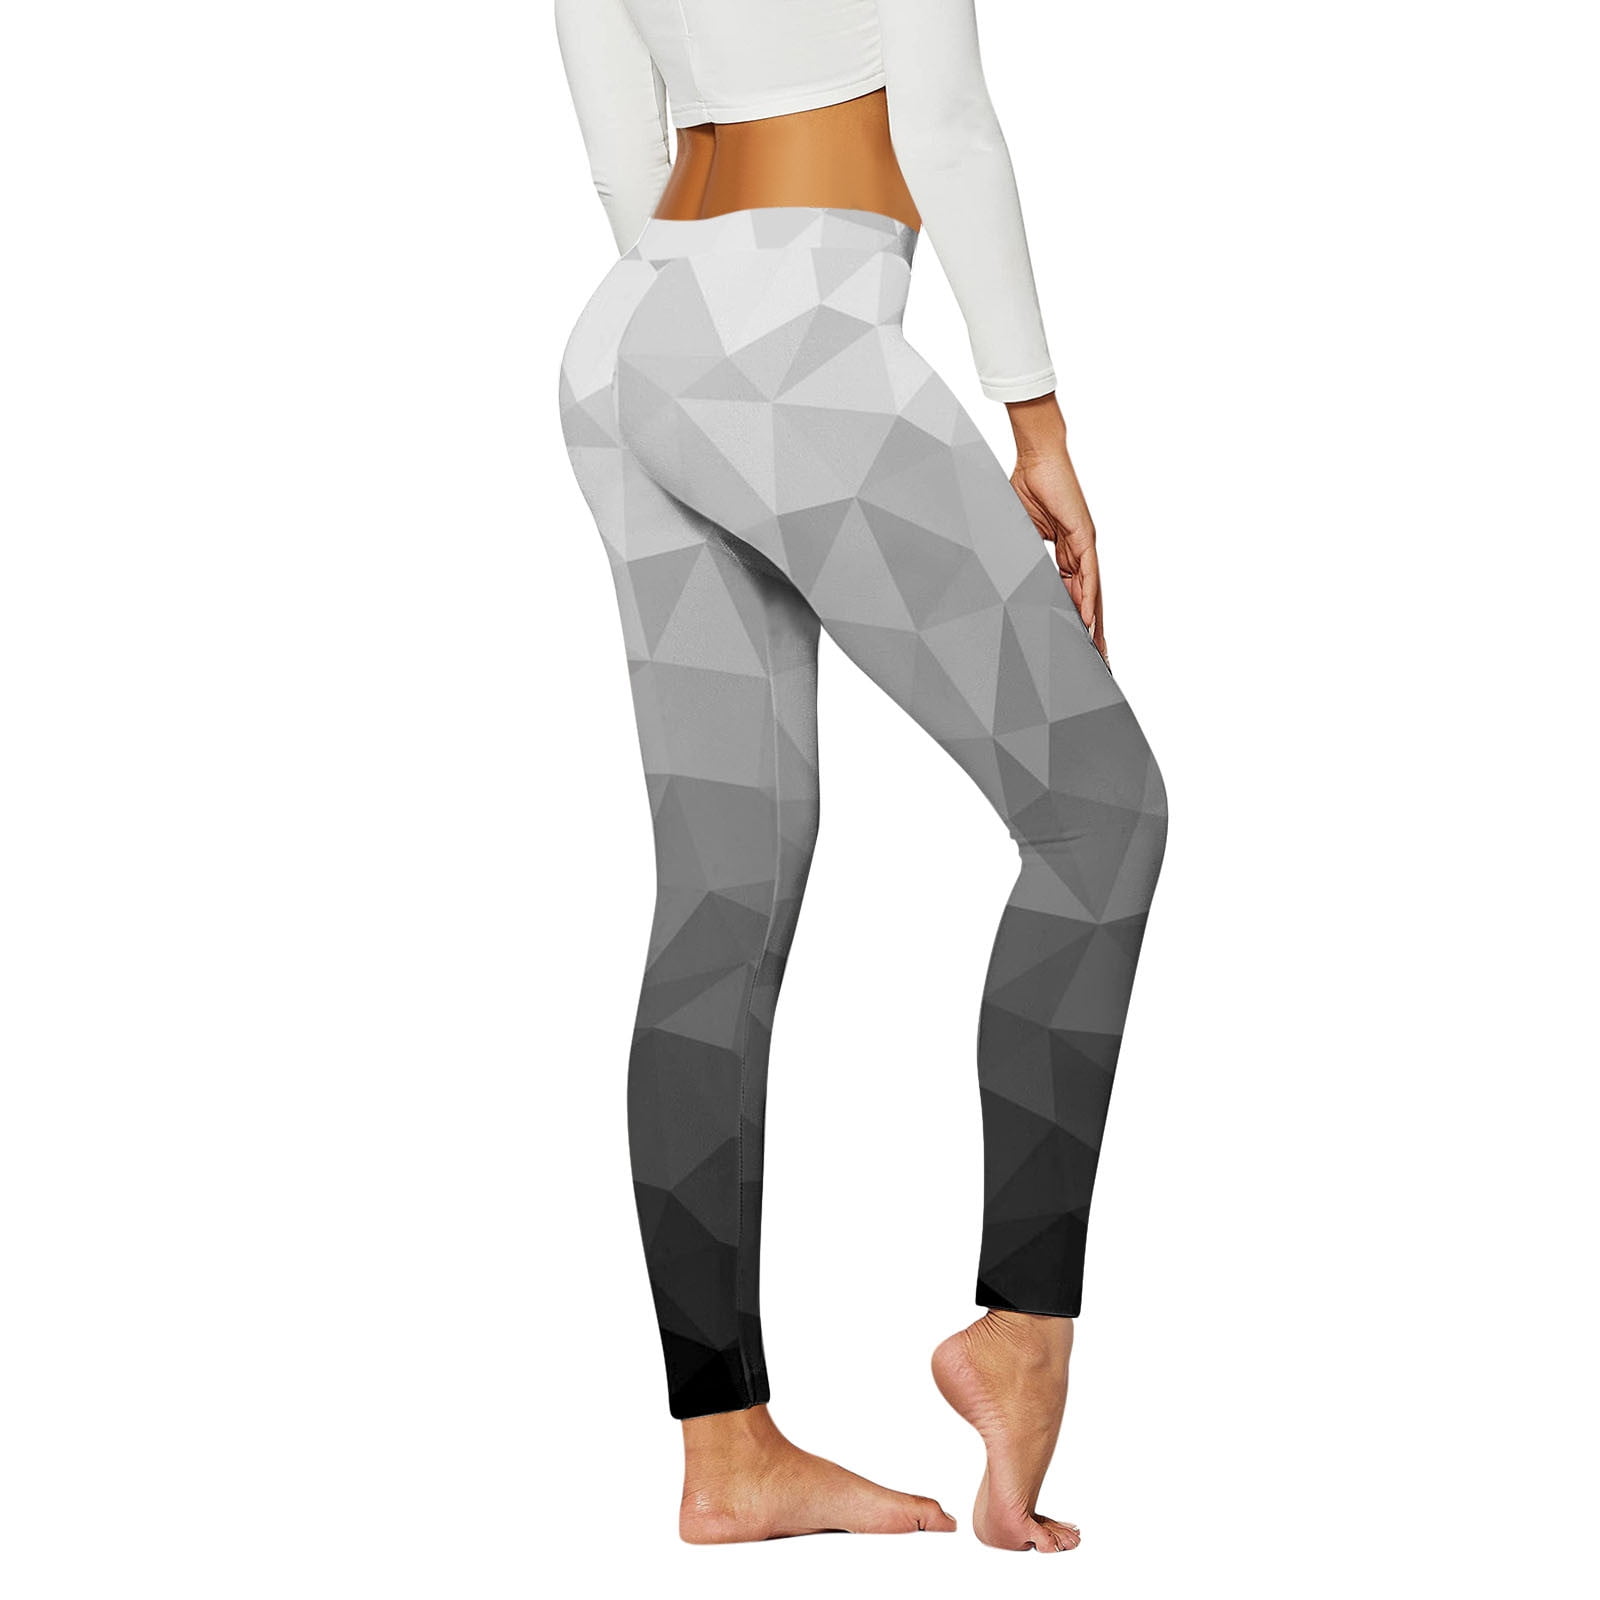 XZHGS Women's Pants for Work Long Women Casual Tight Sports Yoga